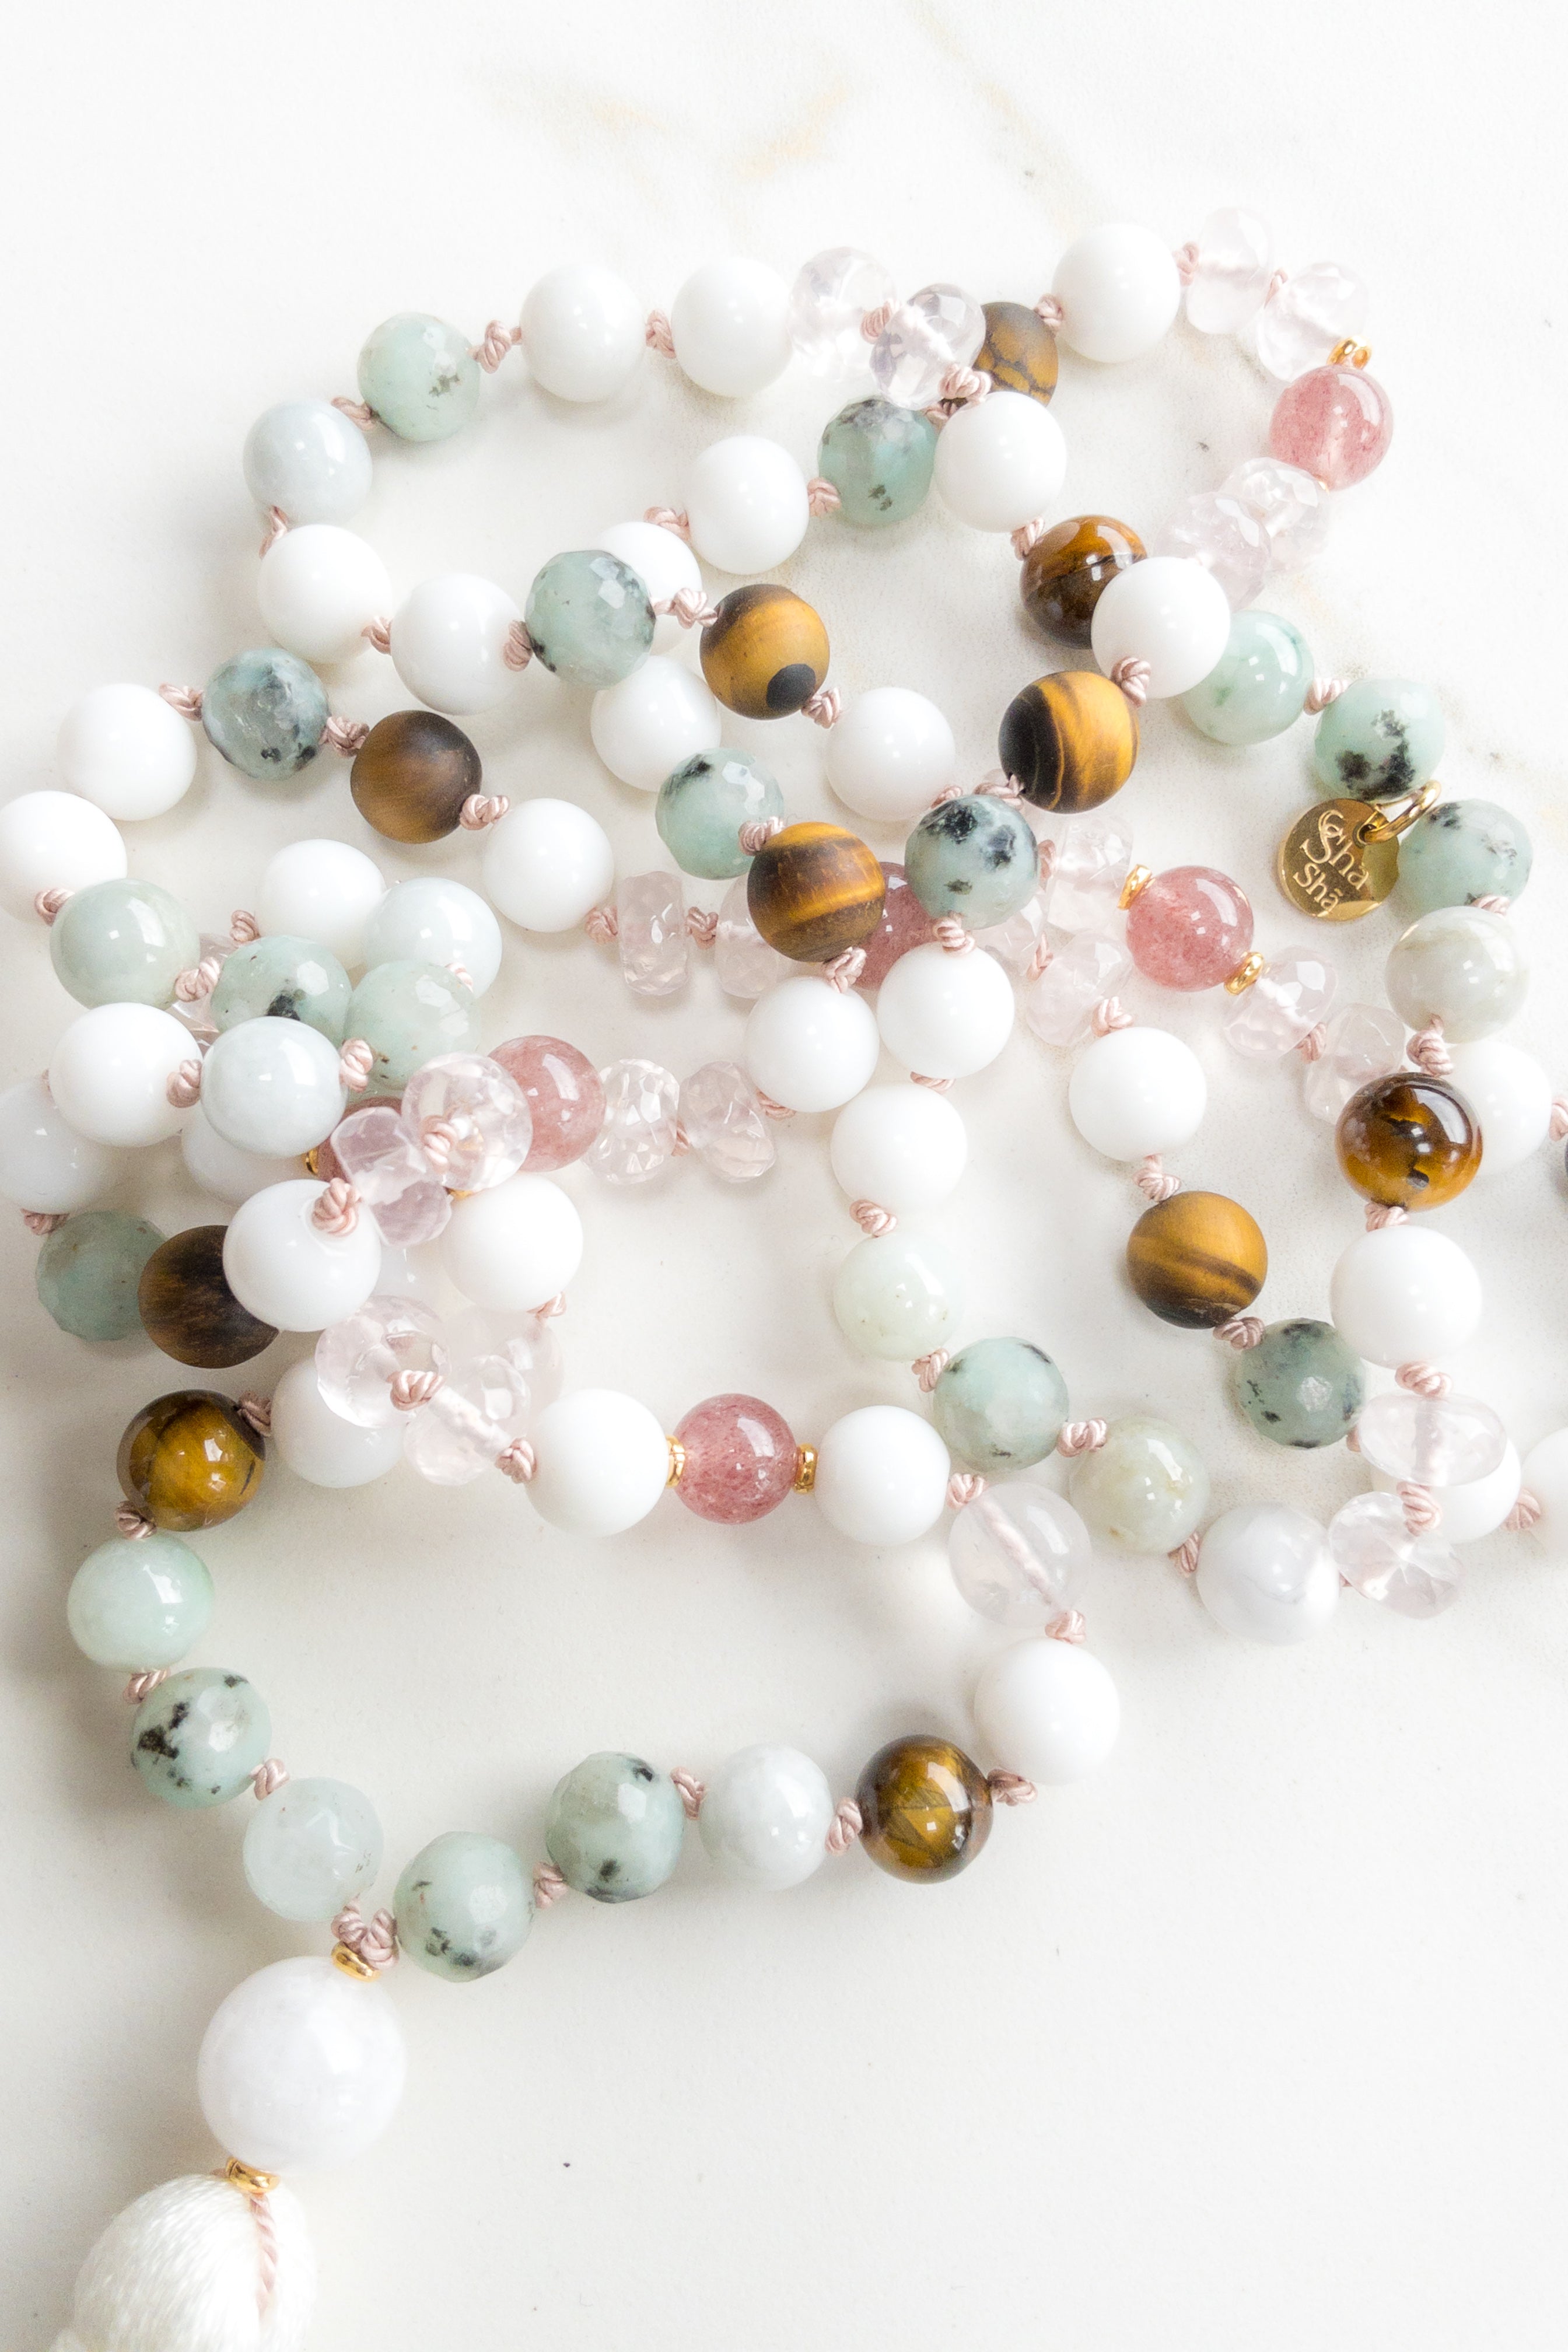 Lotus Serenity Mala beads - kiwi jasper, pink strawberry quartz, white onyx, tiger eye - OceanEye - ShaShã jewelry Switzerland - india inspired jewelry 